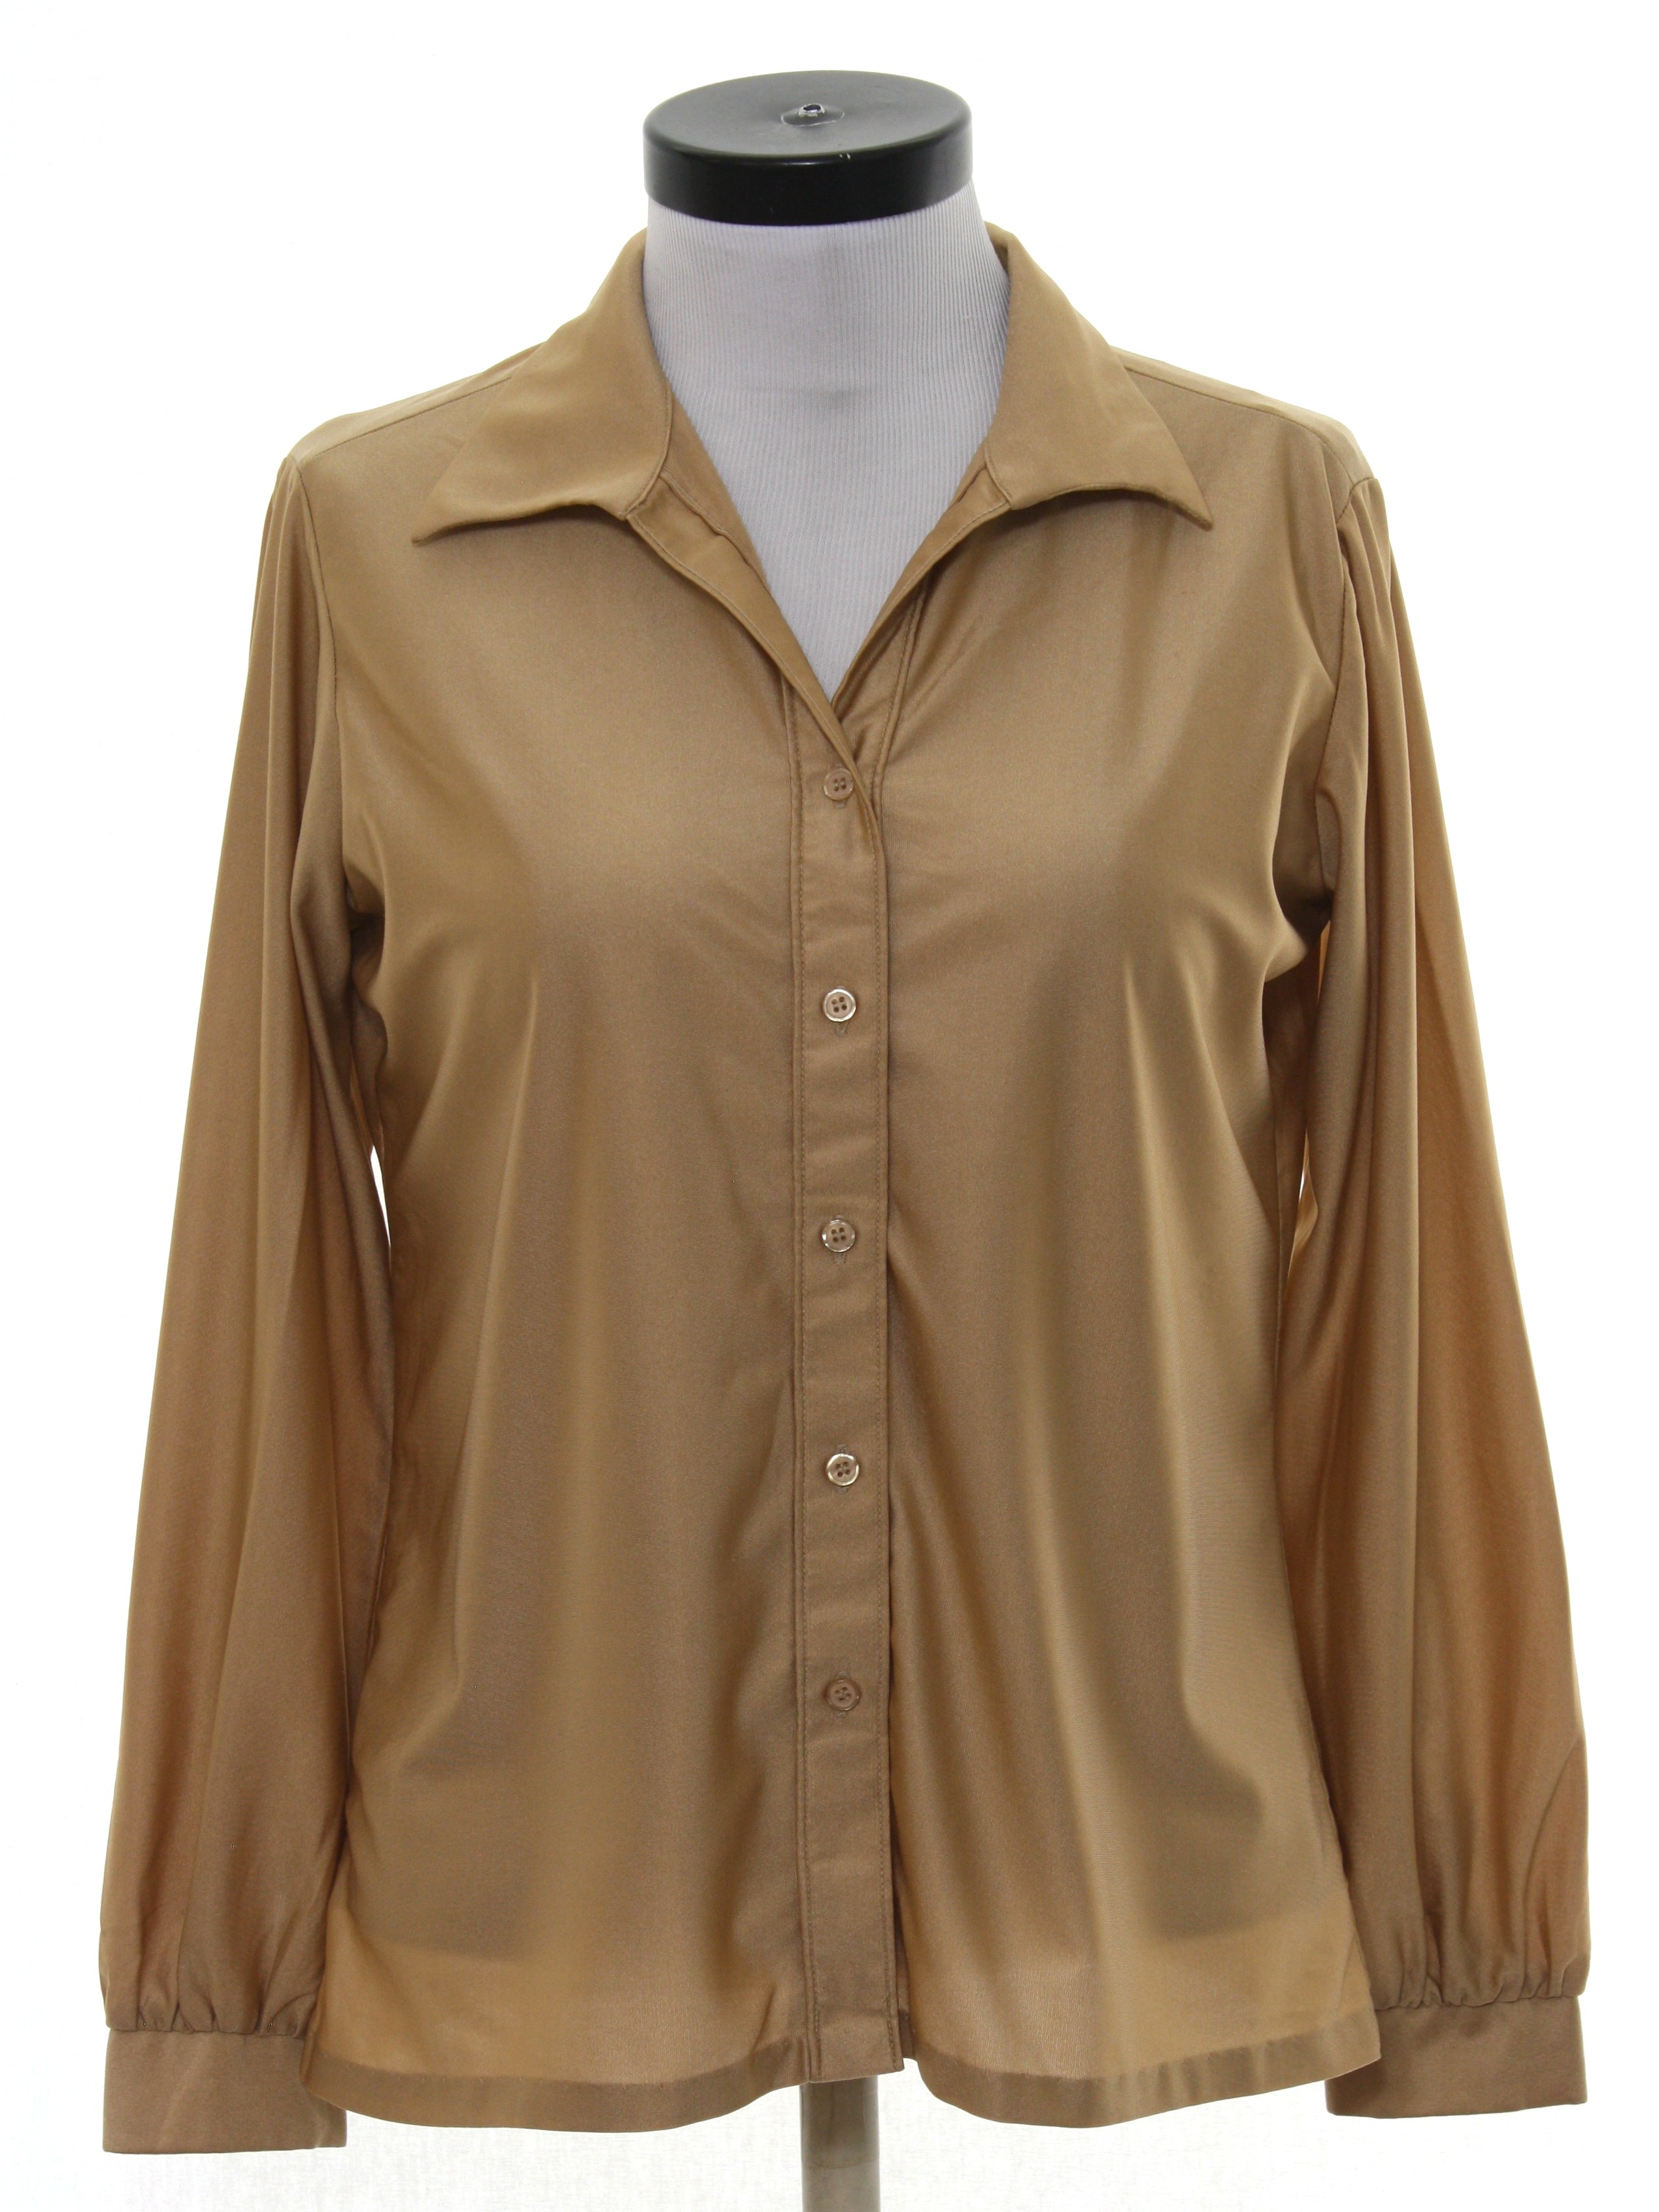 Retro 1970's Disco Shirt (Gailord) : 70s -Gailord- Womens bronze qiana ...